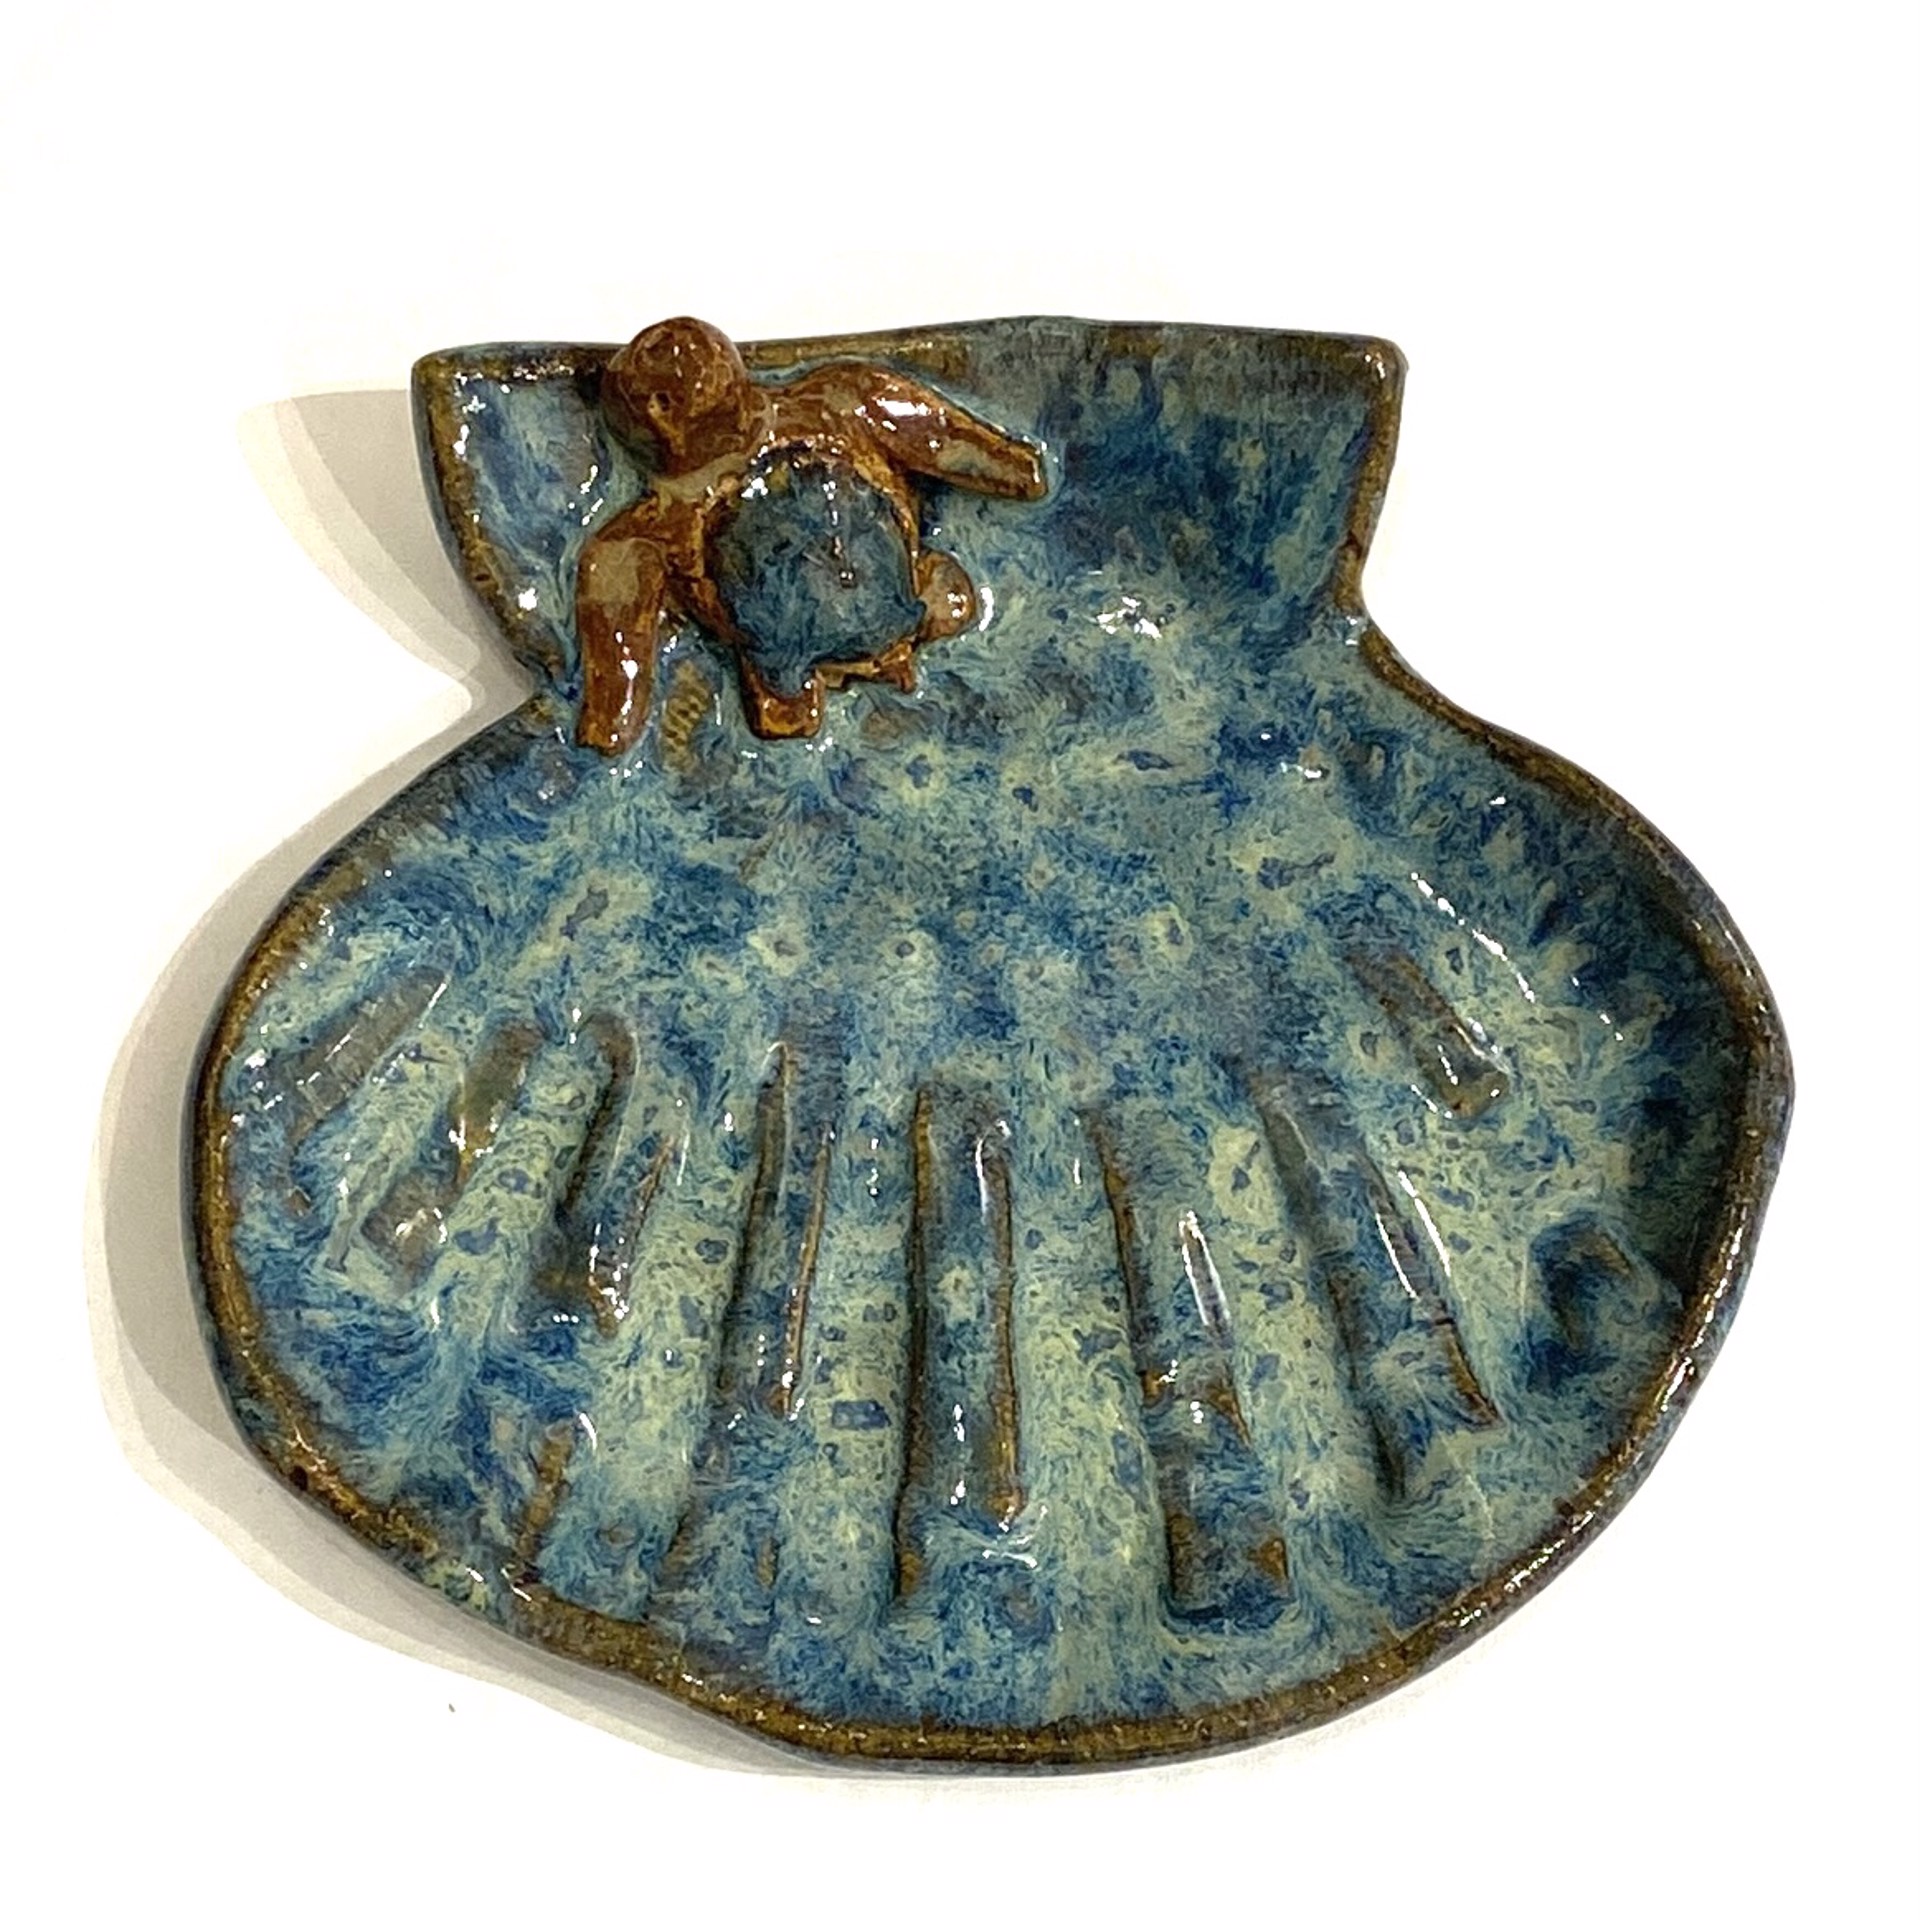 Shell Dish with Turtle (Blue Glaze) LG23-1194 by Jim & Steffi Logan